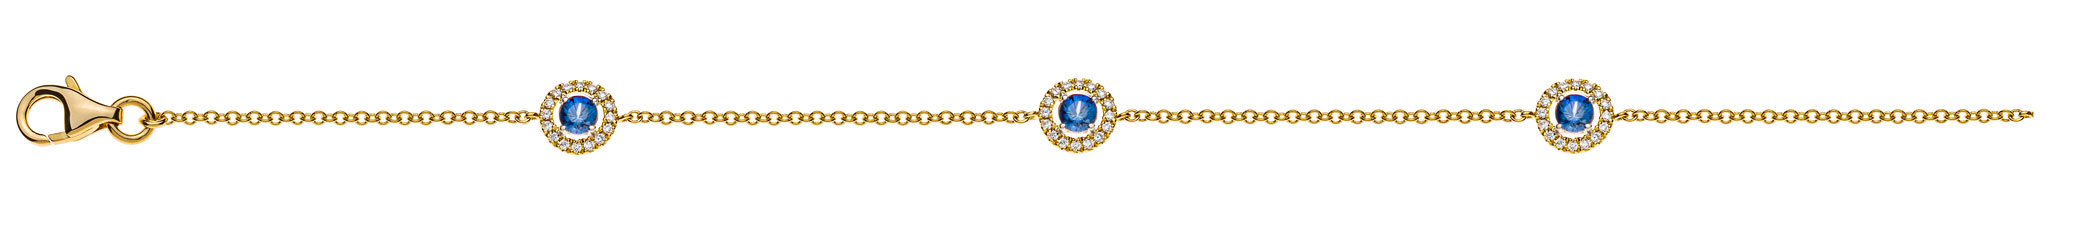 AURONOS Prestige Bracelet 18K Yellow Gold Sapphire Diamond 19cm